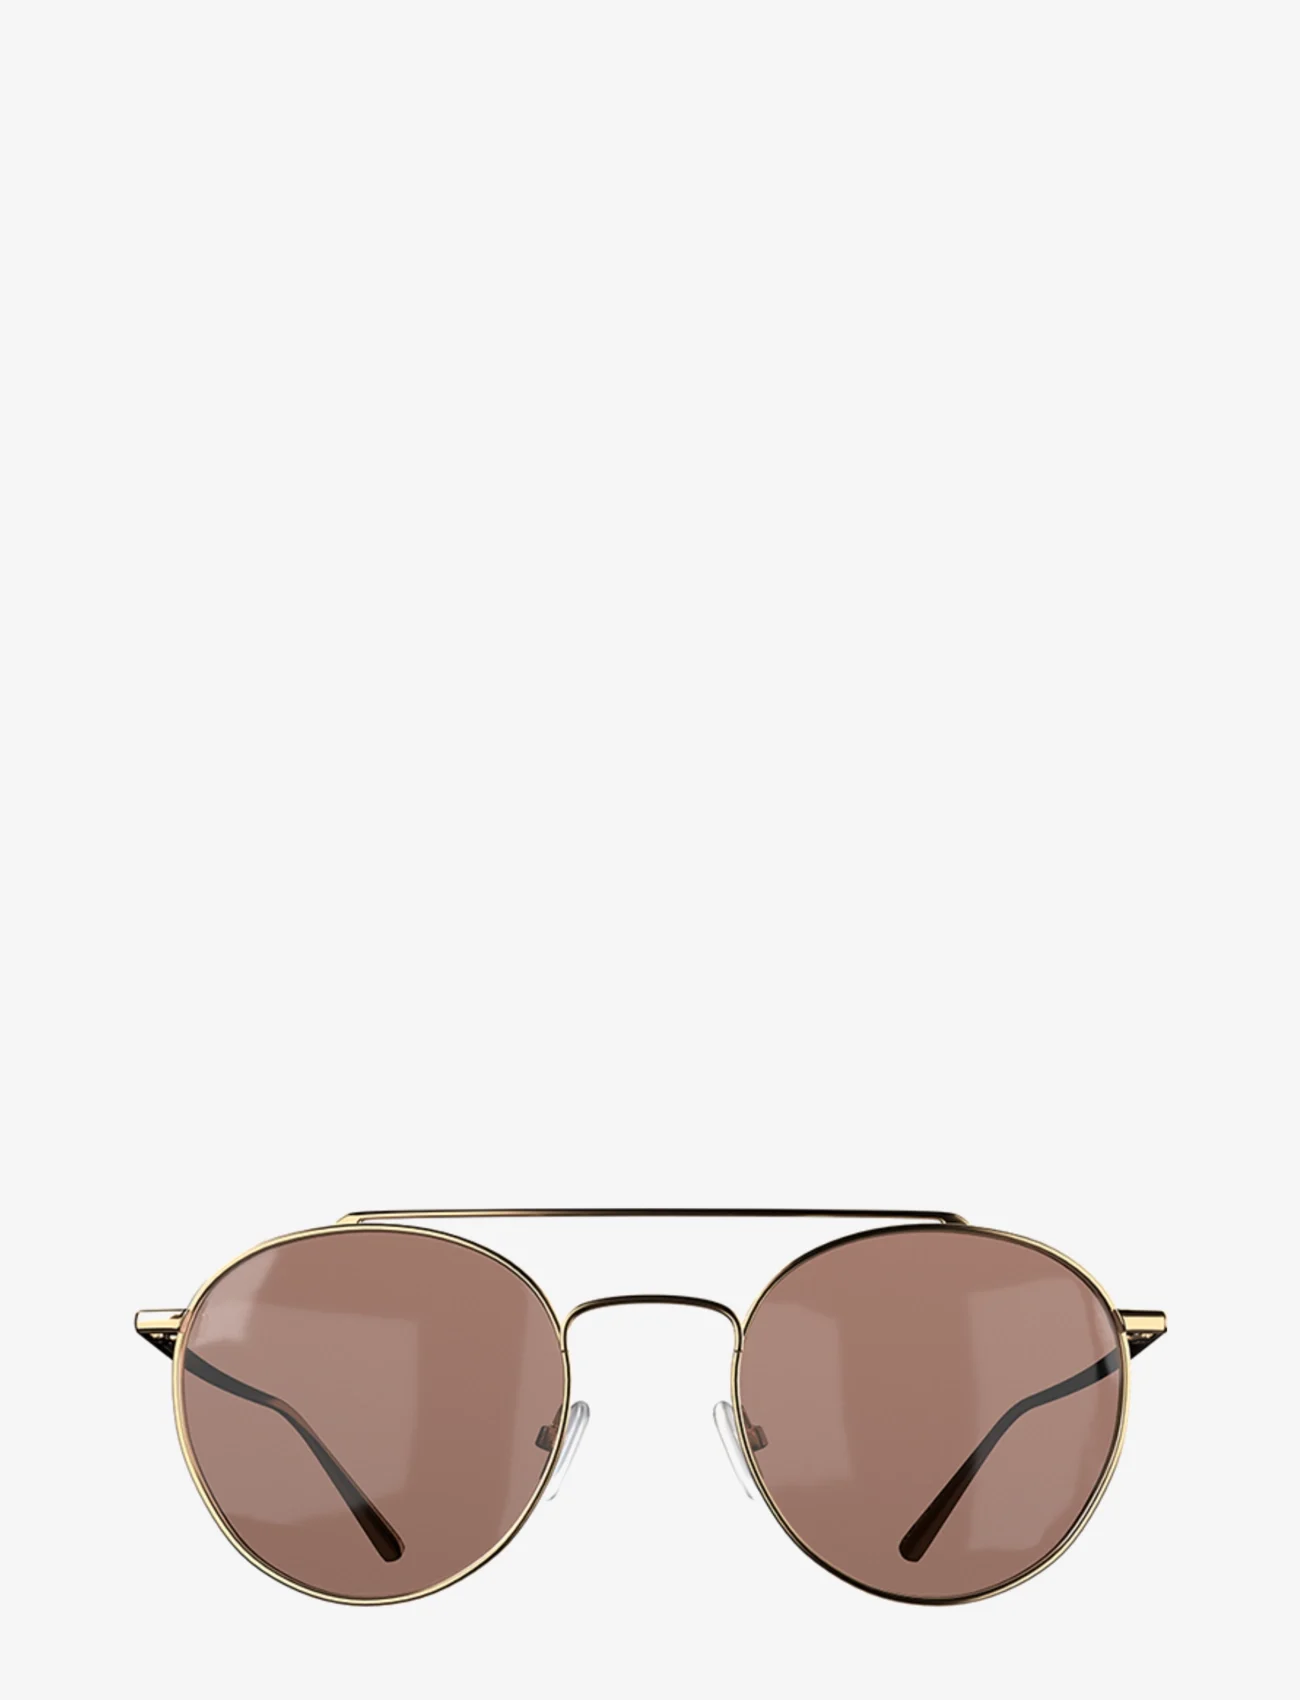 Corlin Eyewear - Lori - aviator solbriller - lori gold brown - 0